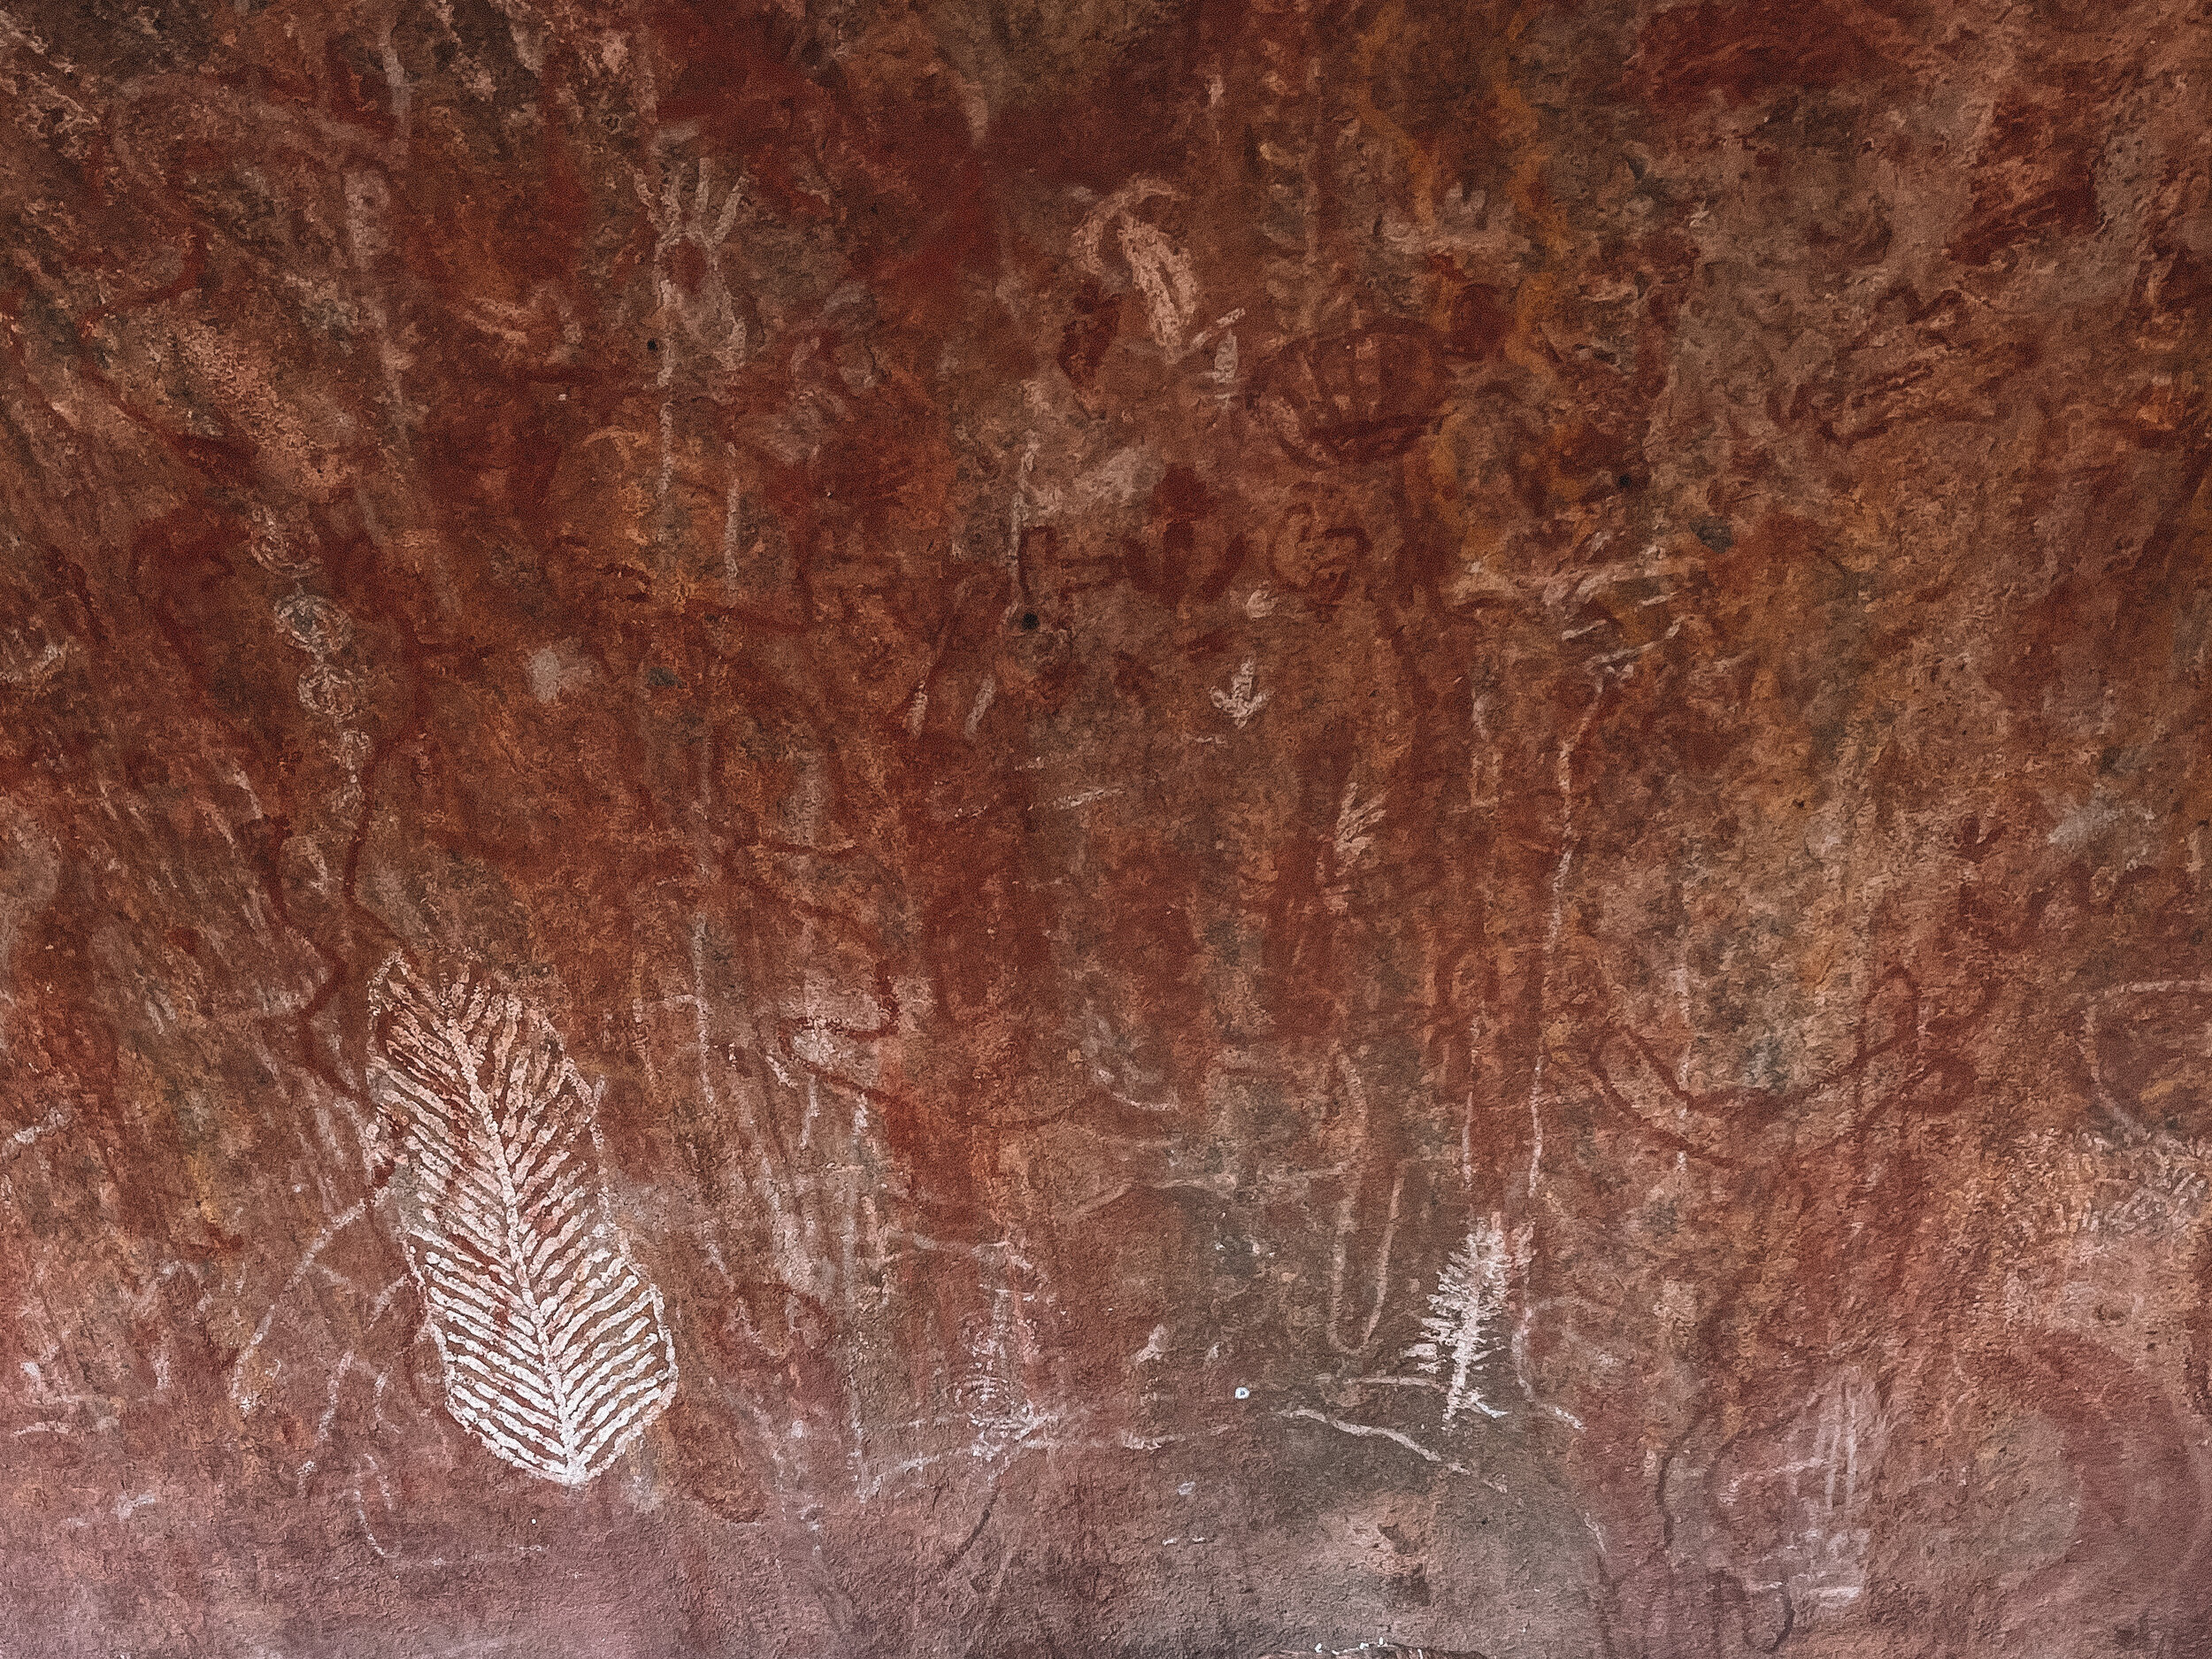 Aboriginal Paintings - Mala Walk - Uluru - Northern Territory - Australia